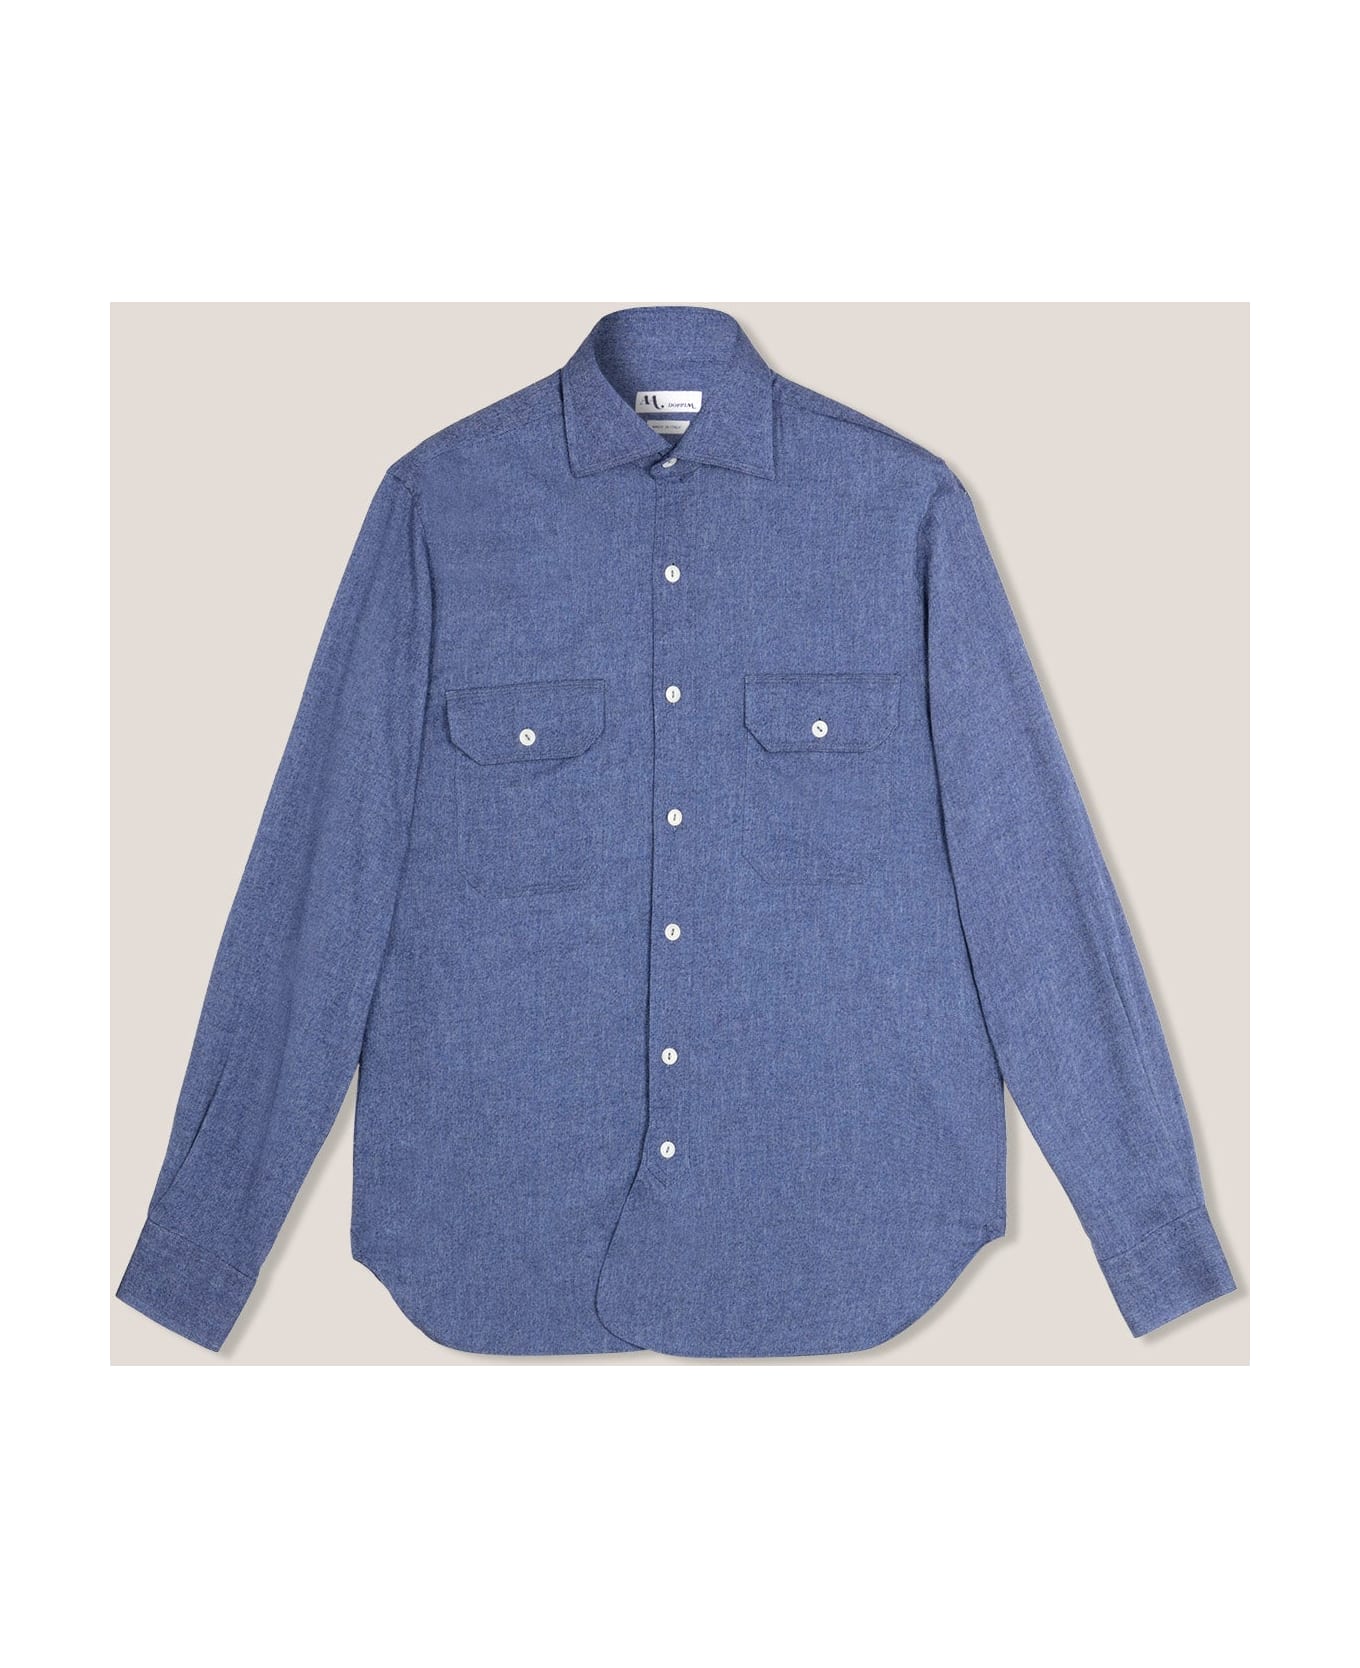 doppiaa Aantero Blue Flannel Shirt